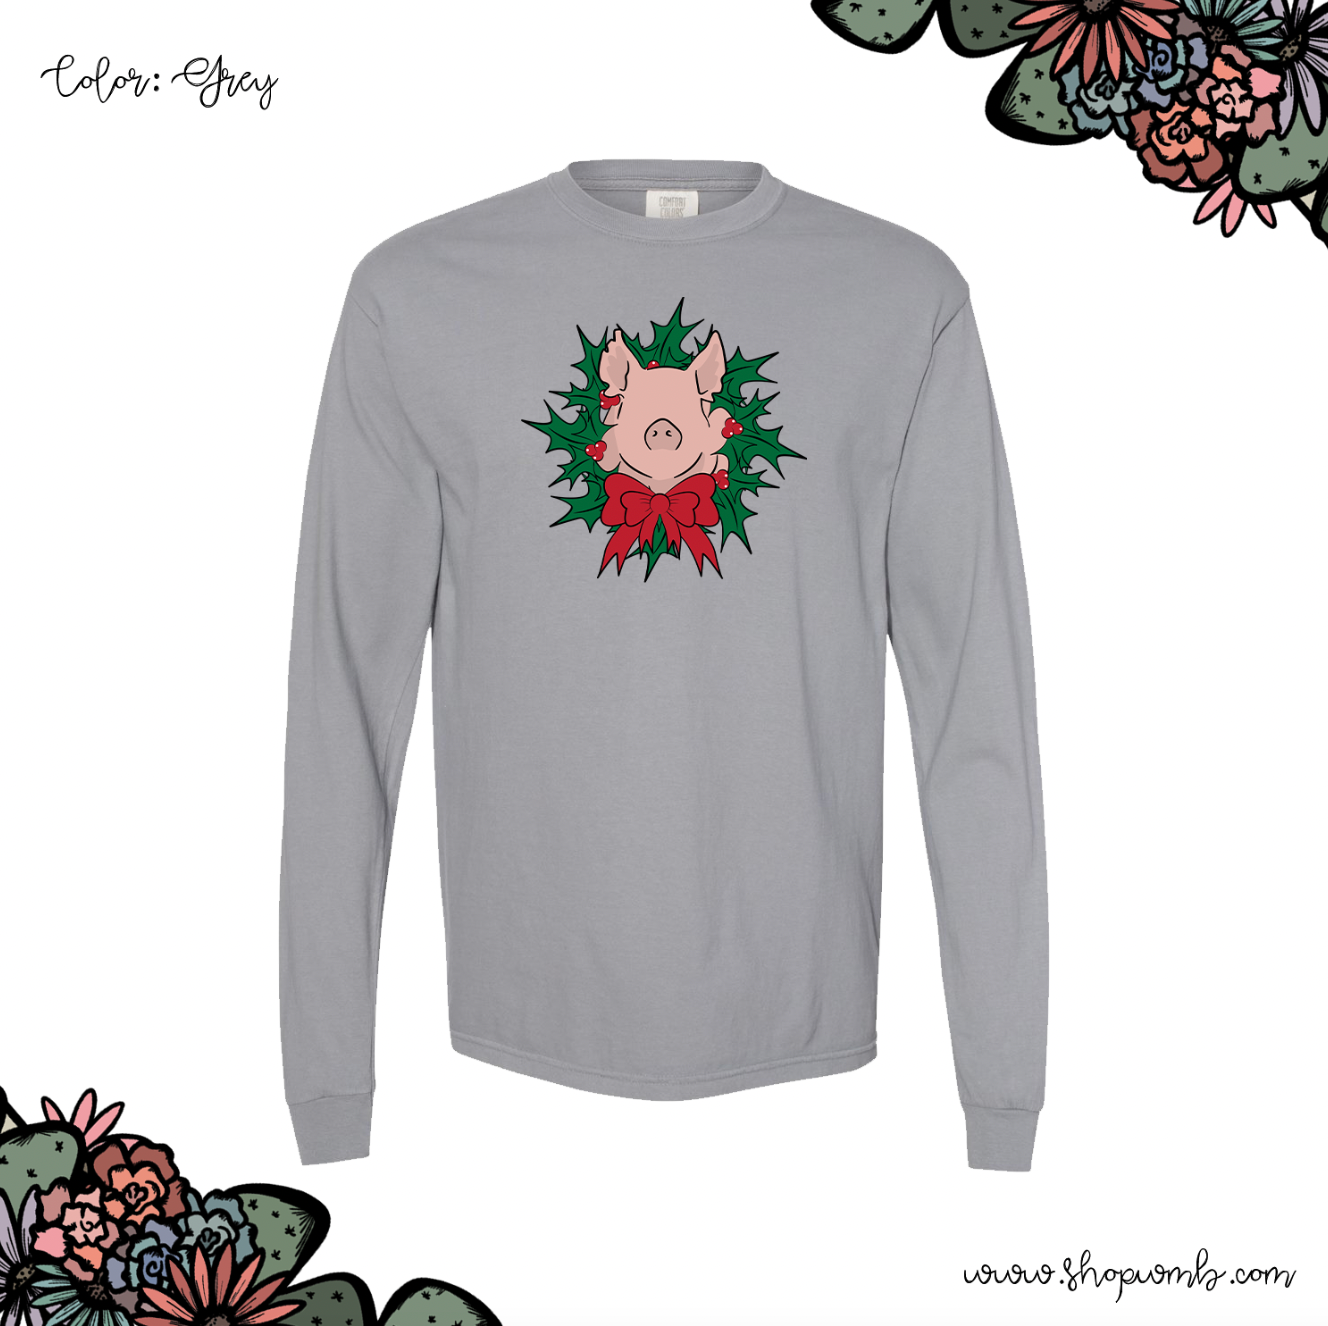 Pig Christmas Wreath LONG SLEEVE T-Shirt (S-3XL) - Multiple Colors!